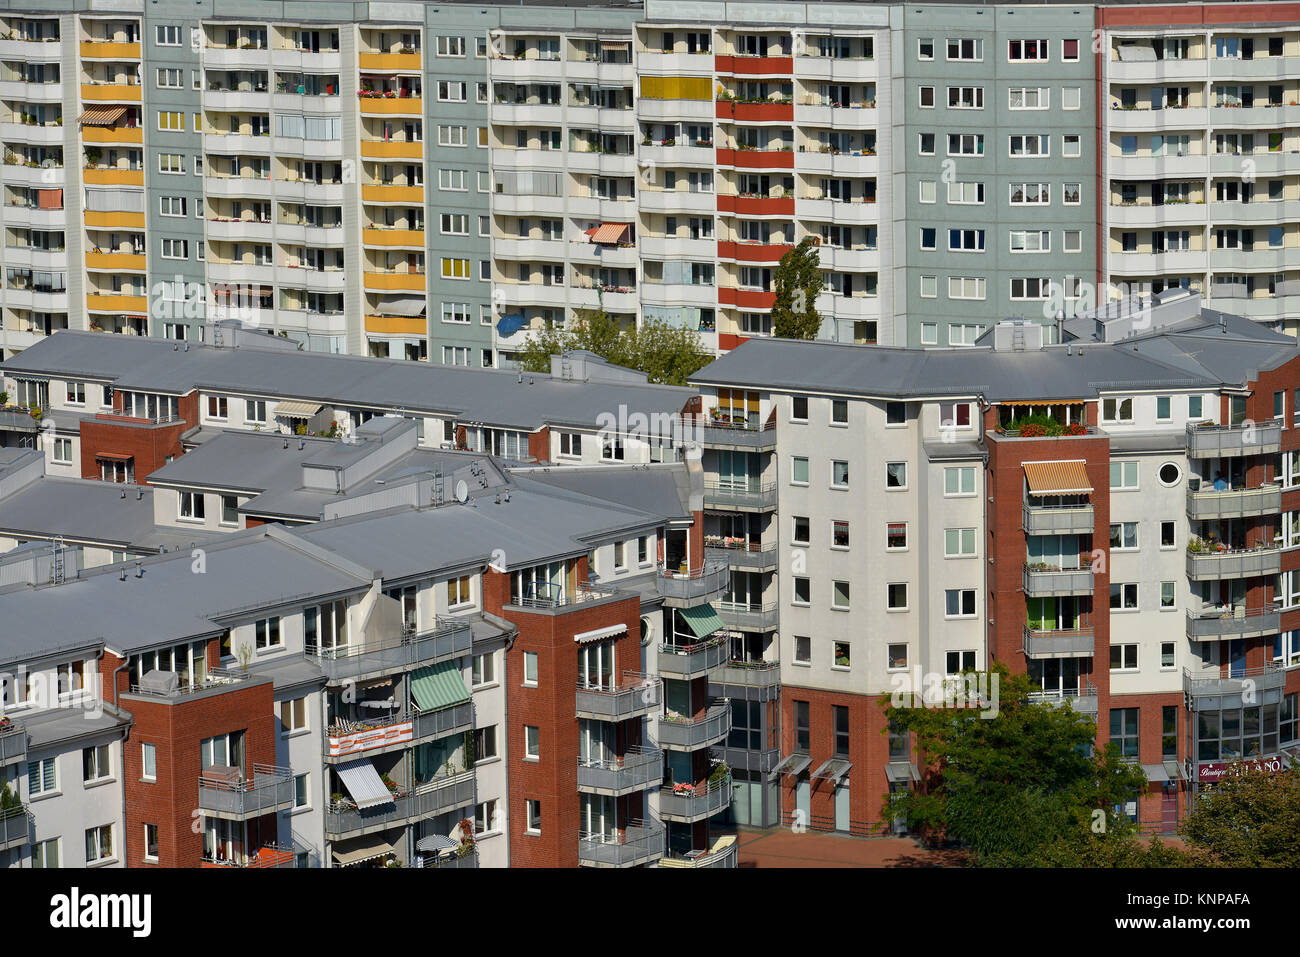 Dwelling houses, avenue of the cosmonauts, Marzahn, Berlin, Germany, Wohnhaeuser, Allee der Kosmonauten, Deutschland Stock Photo